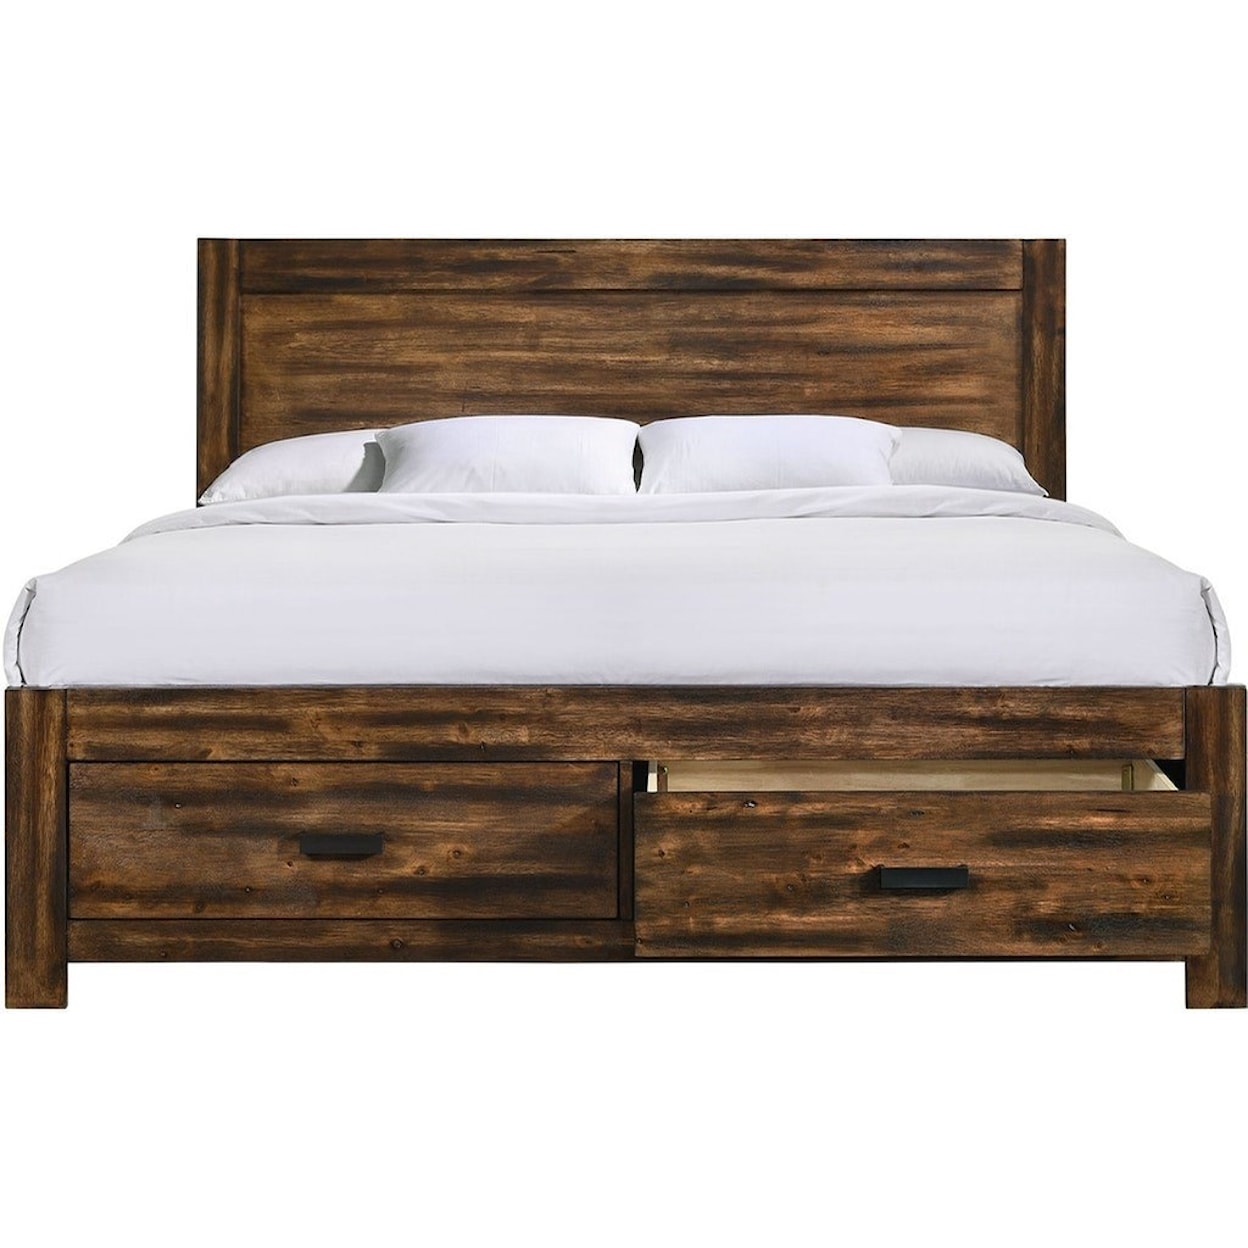 Elements International Warner Queen Bed with 2 Storage Drawers